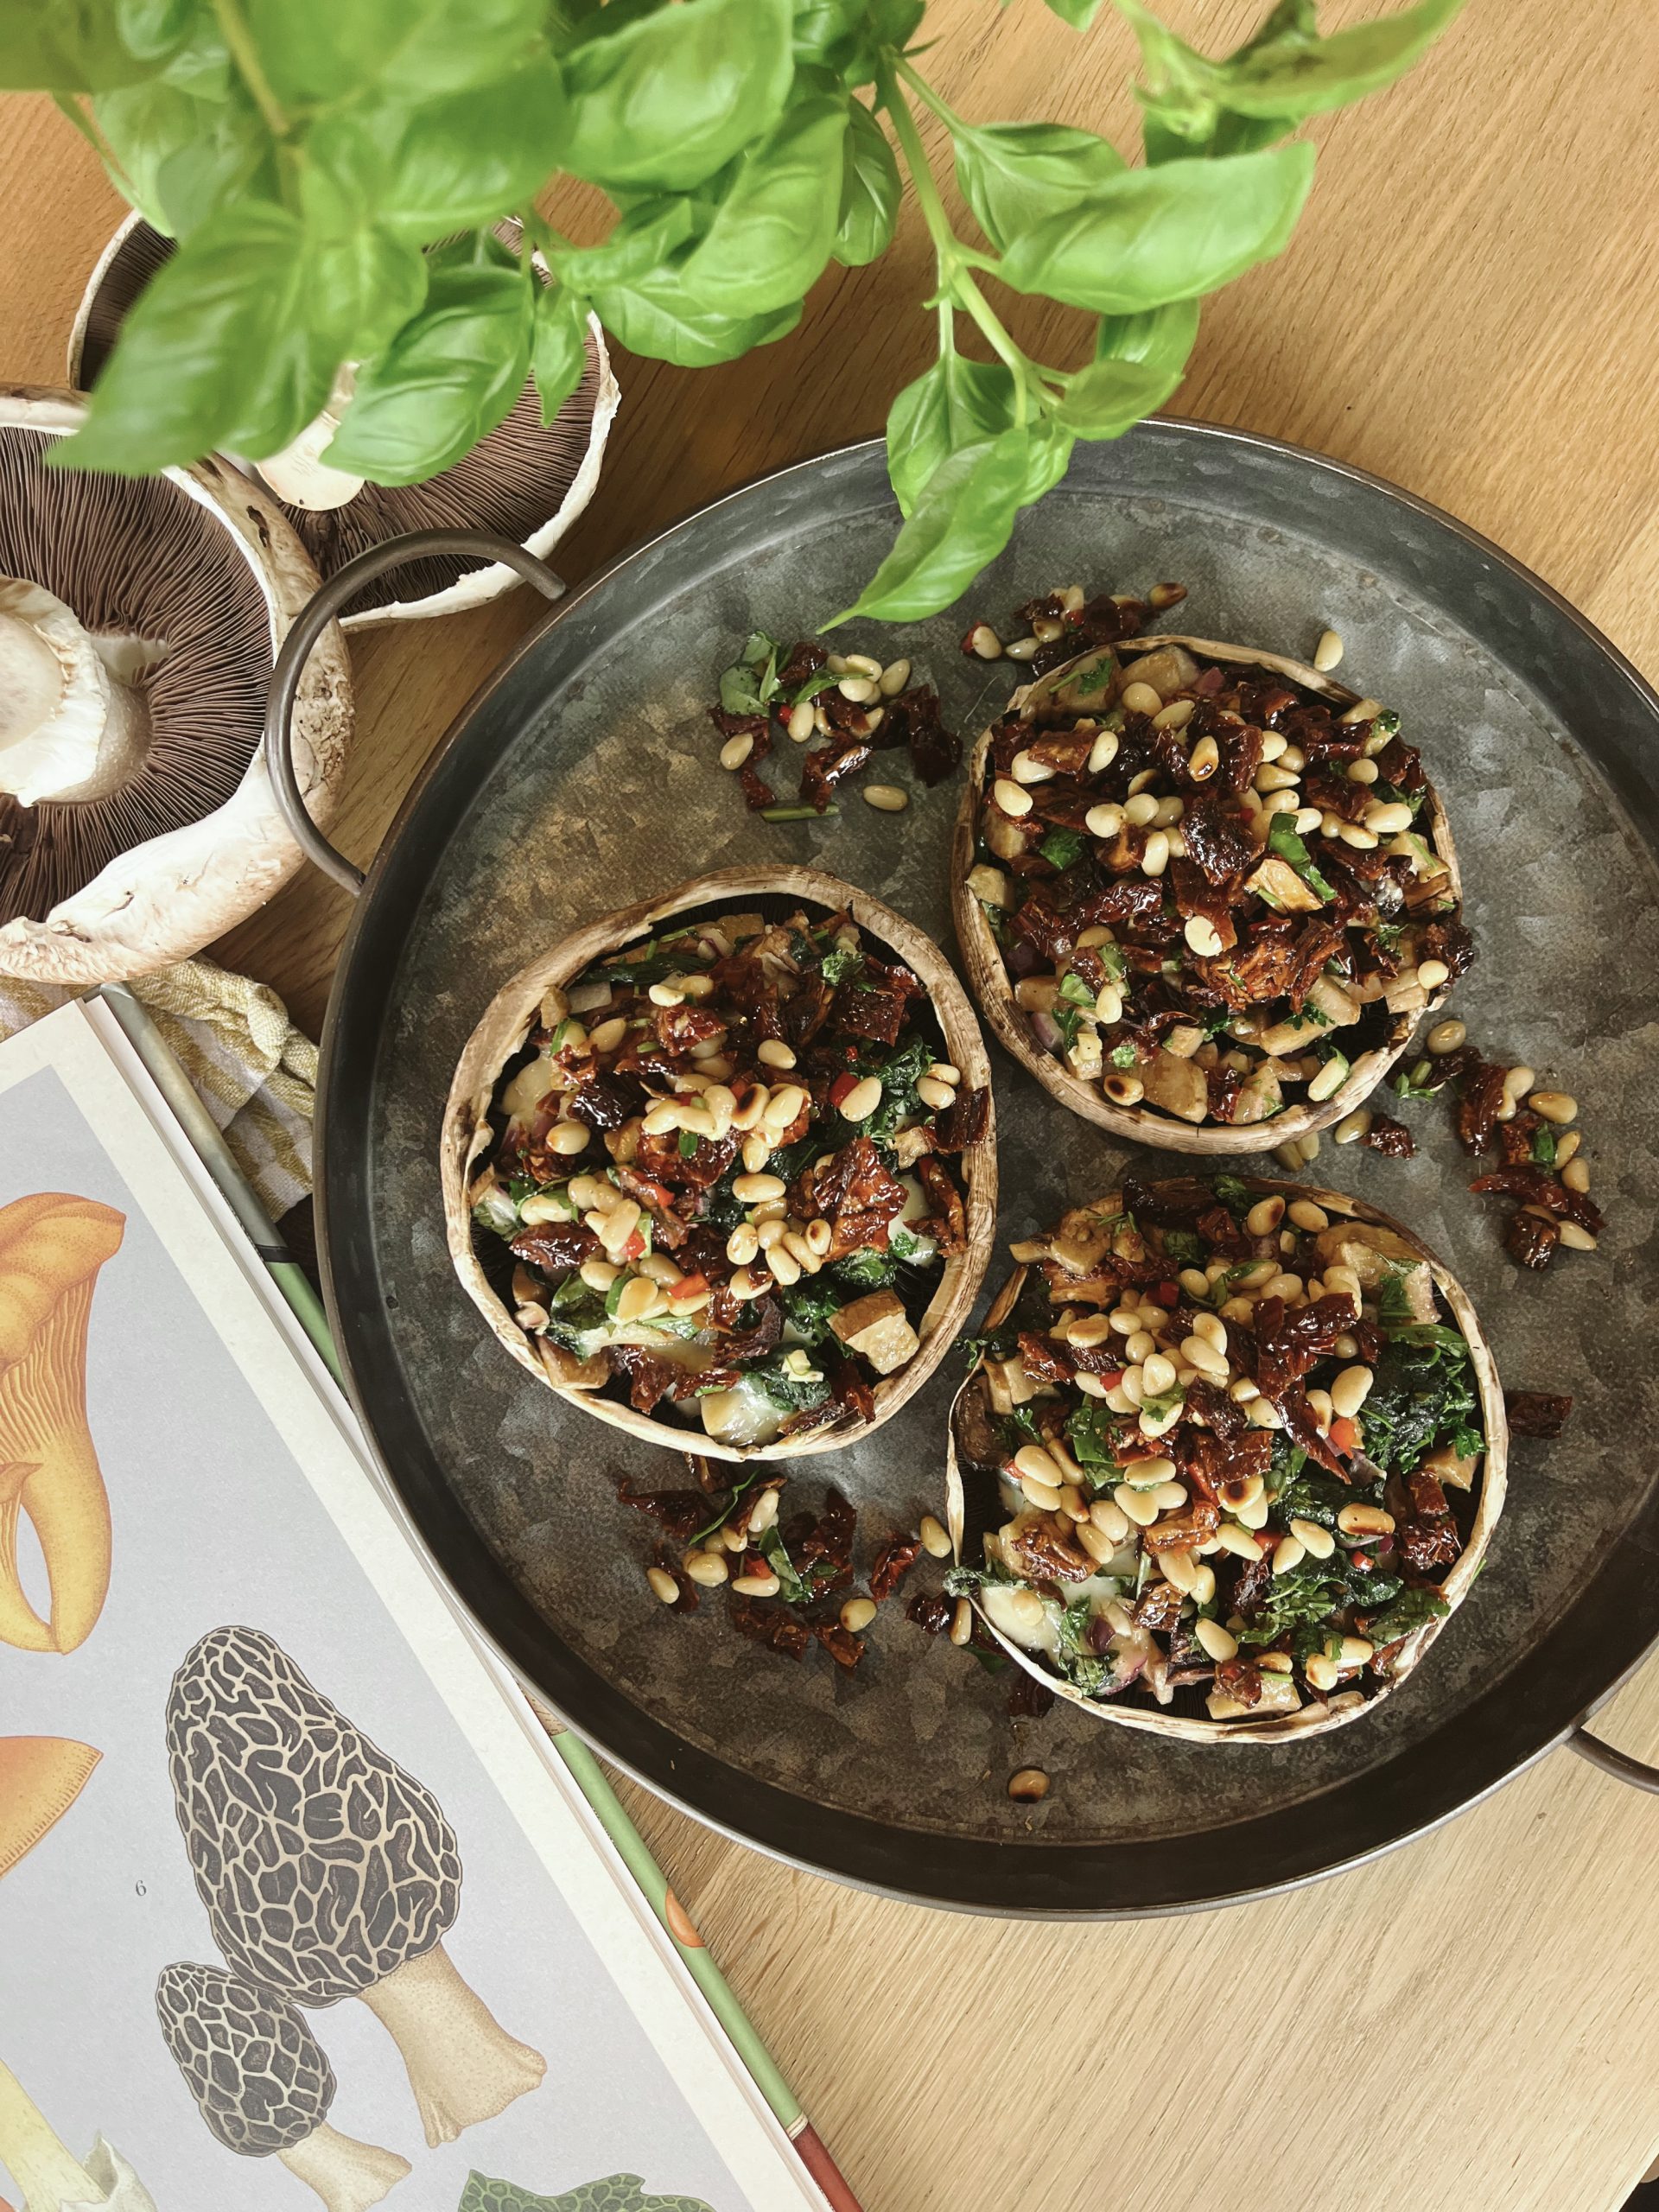 Zubereitung Deutscher Bio Speisepilz Portobello Pilze gefüllt Soulfood bei Mjko